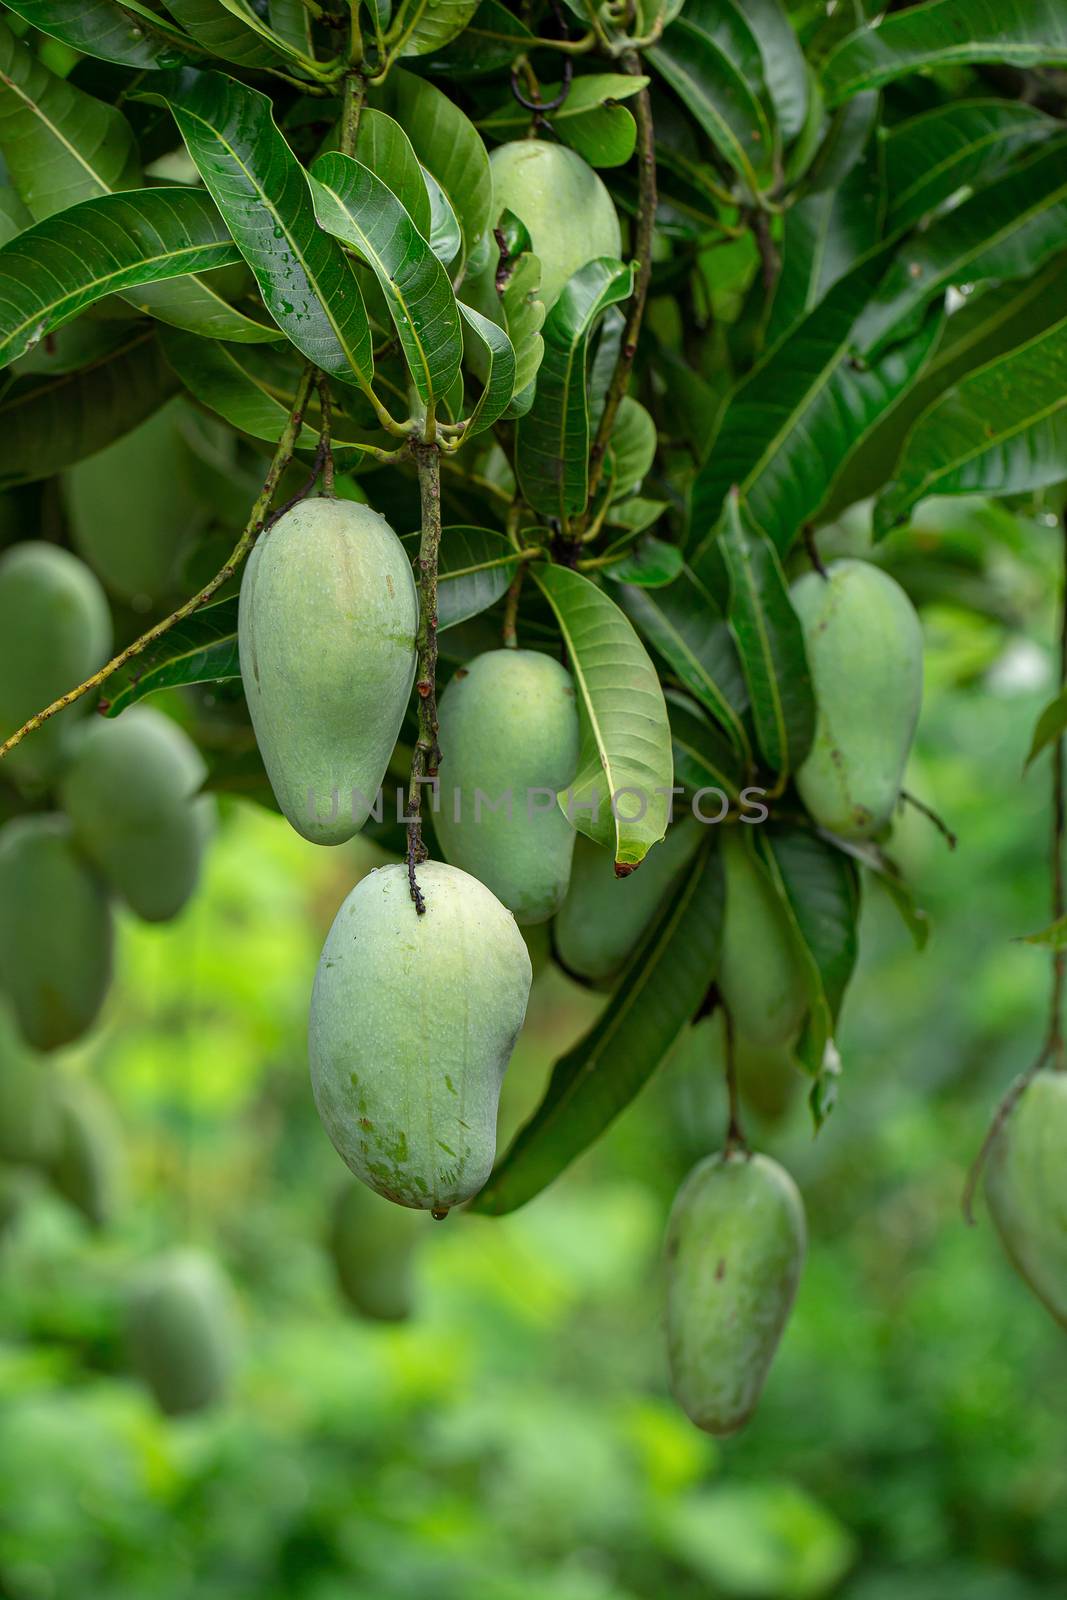 Closeup of Green Mangoes hanging on Mango tree by kaiskynet